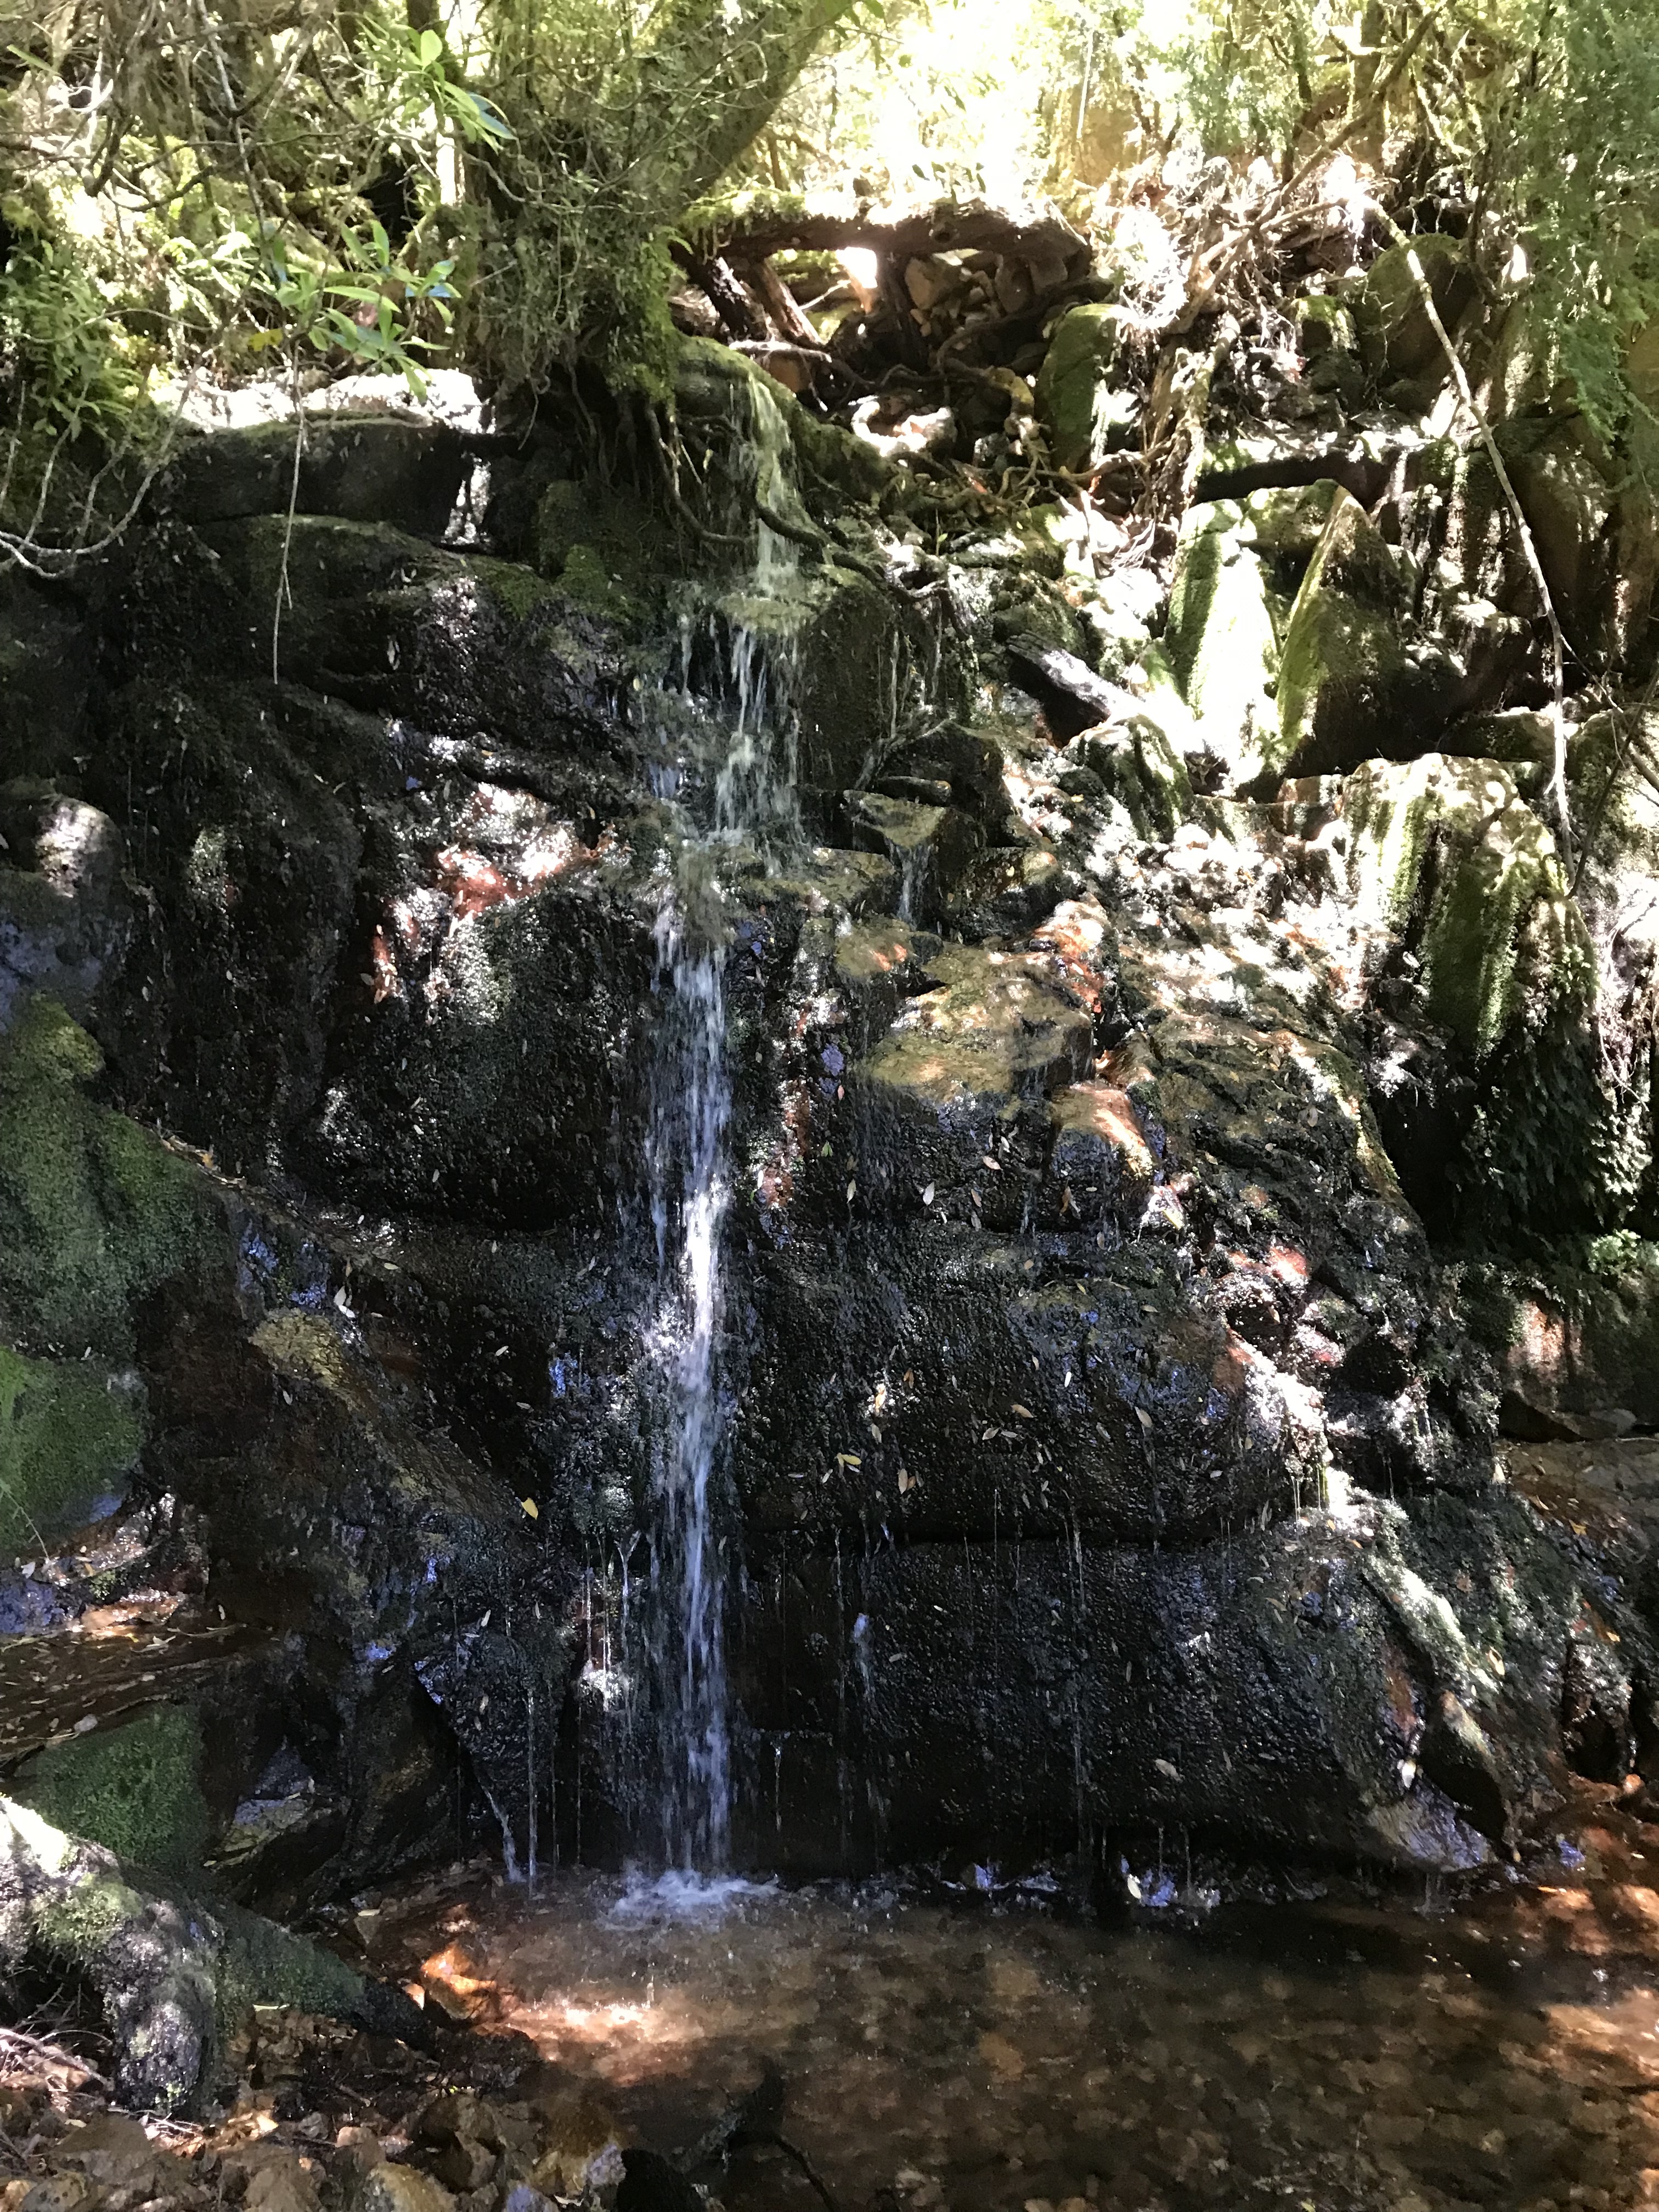 Tumbling Falls - low summer flow